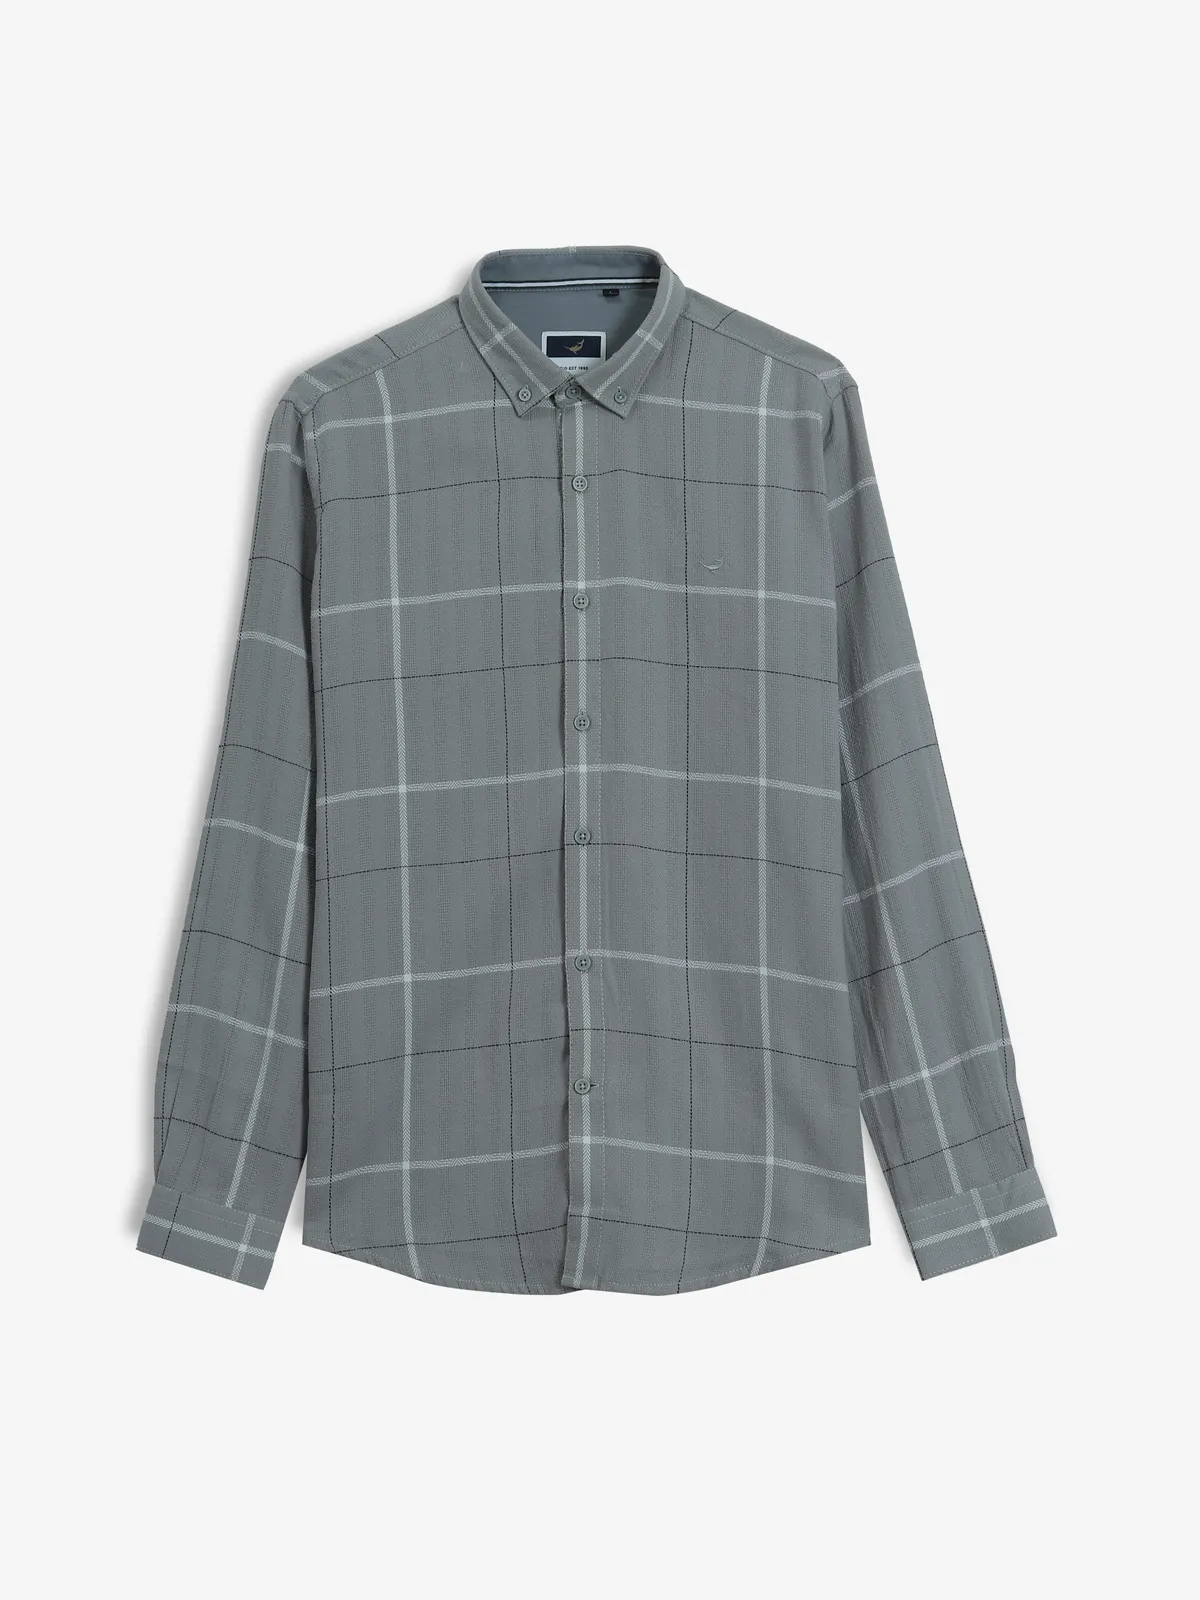 FRIO checks grey cotton casual shirt